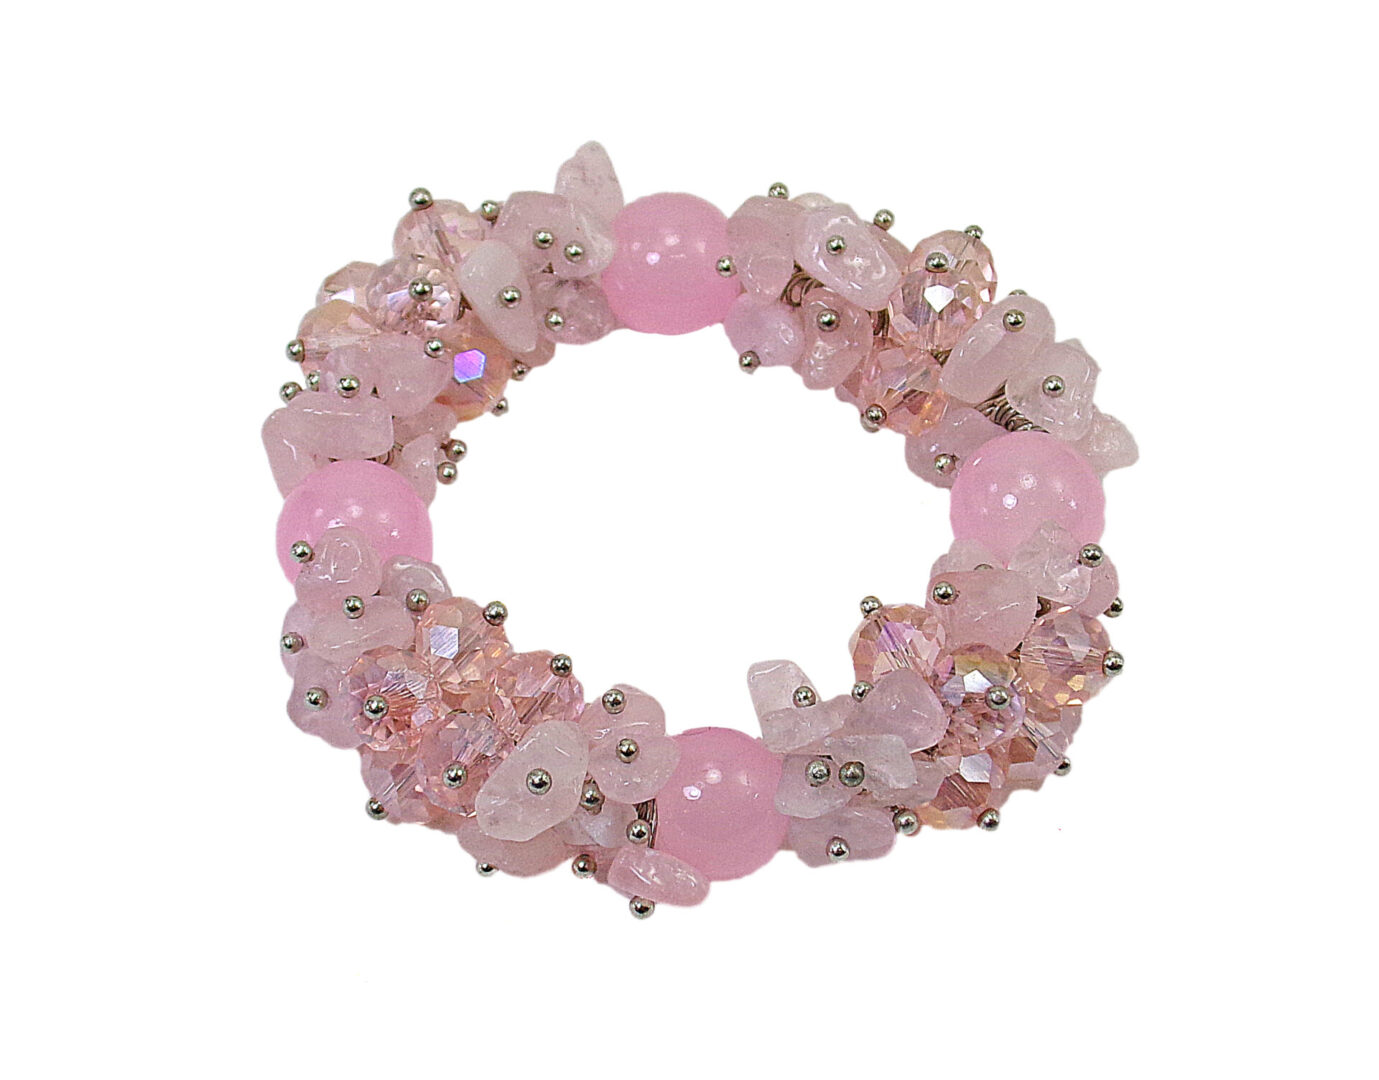 Elastic Printed Glass Beads Bracelet, Pink